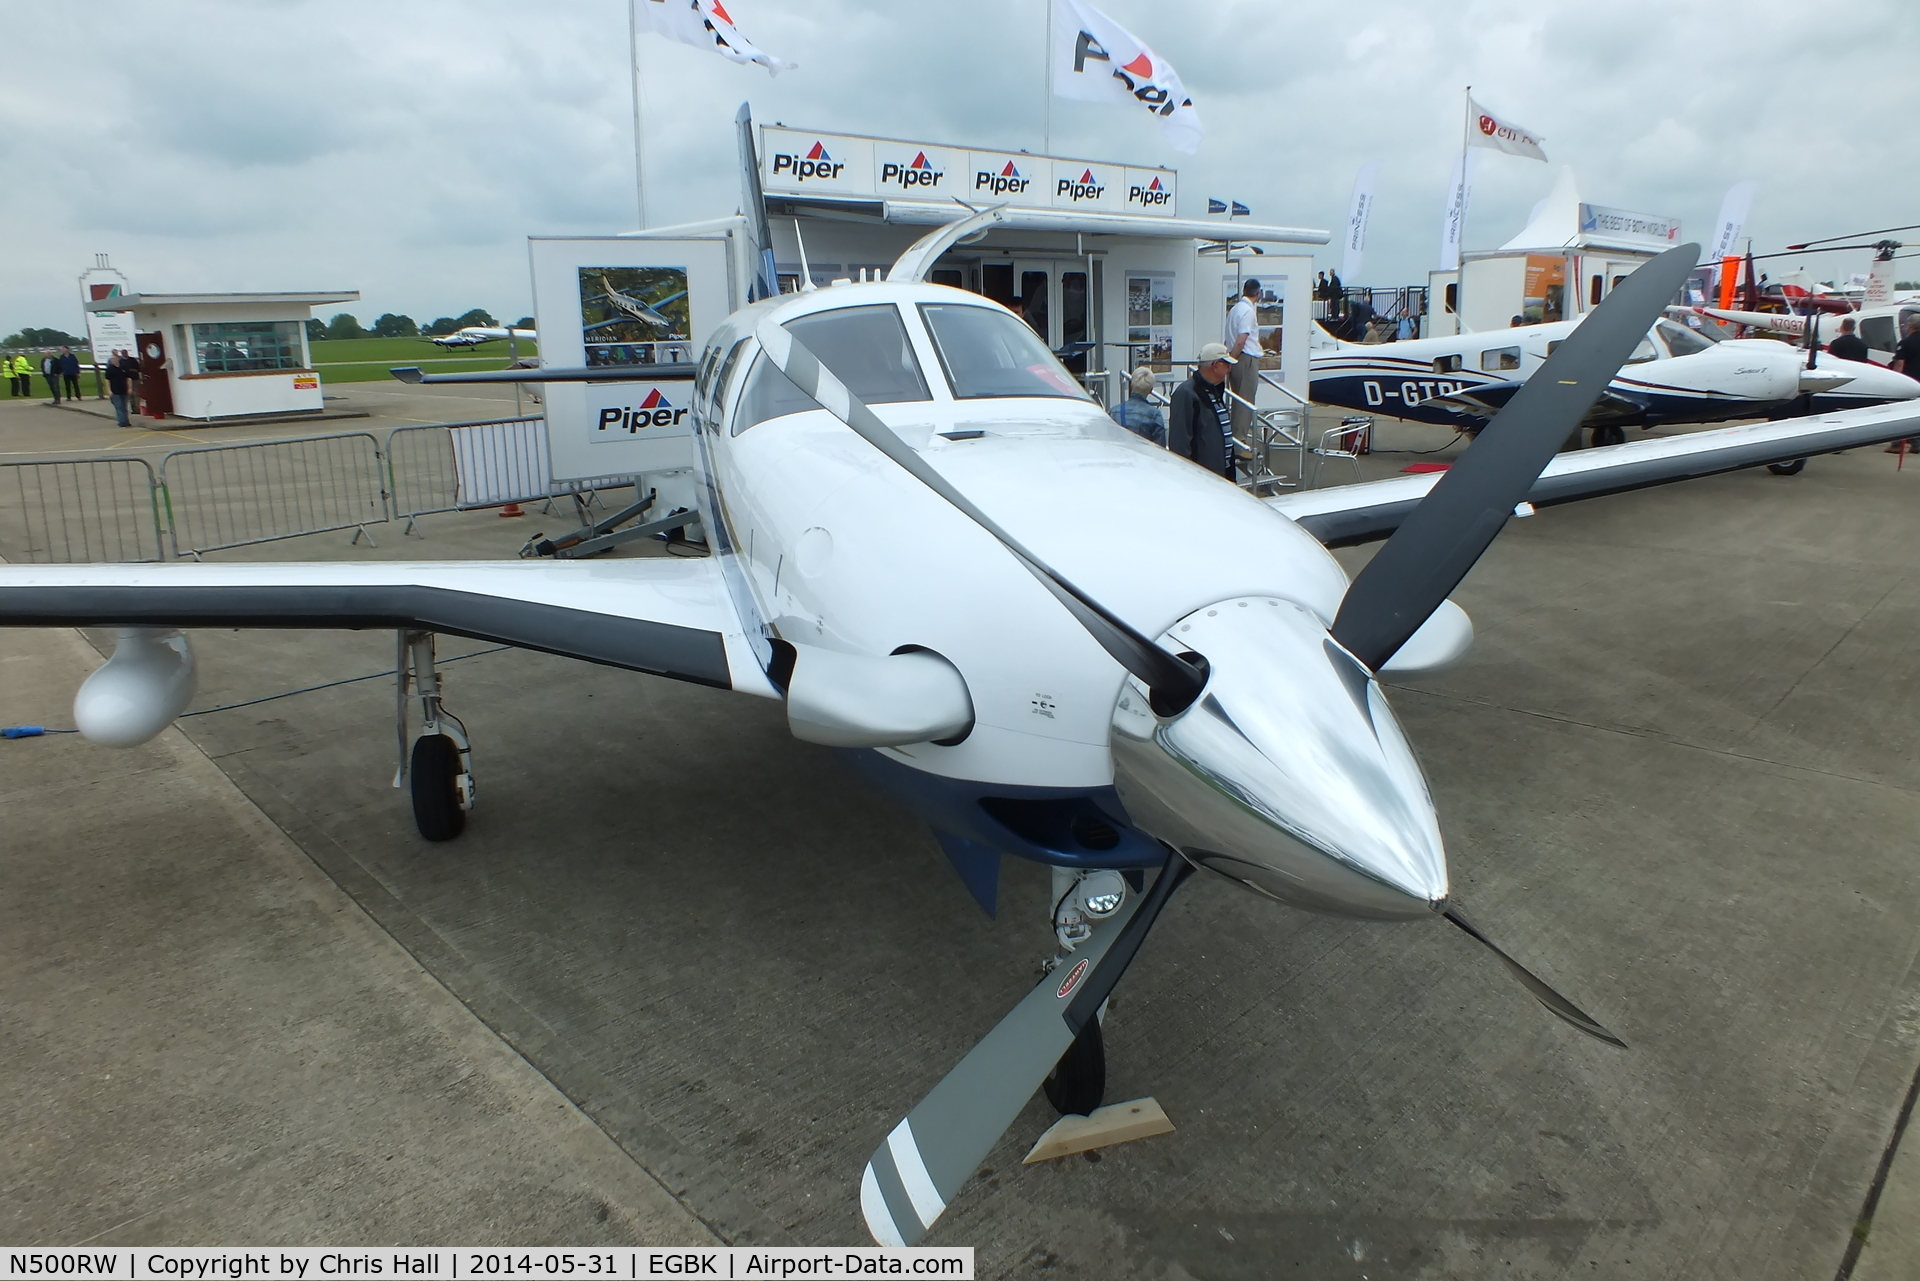 N500RW, 2011 Socata TBM-700 C/N 578, at AeroExpo 2014